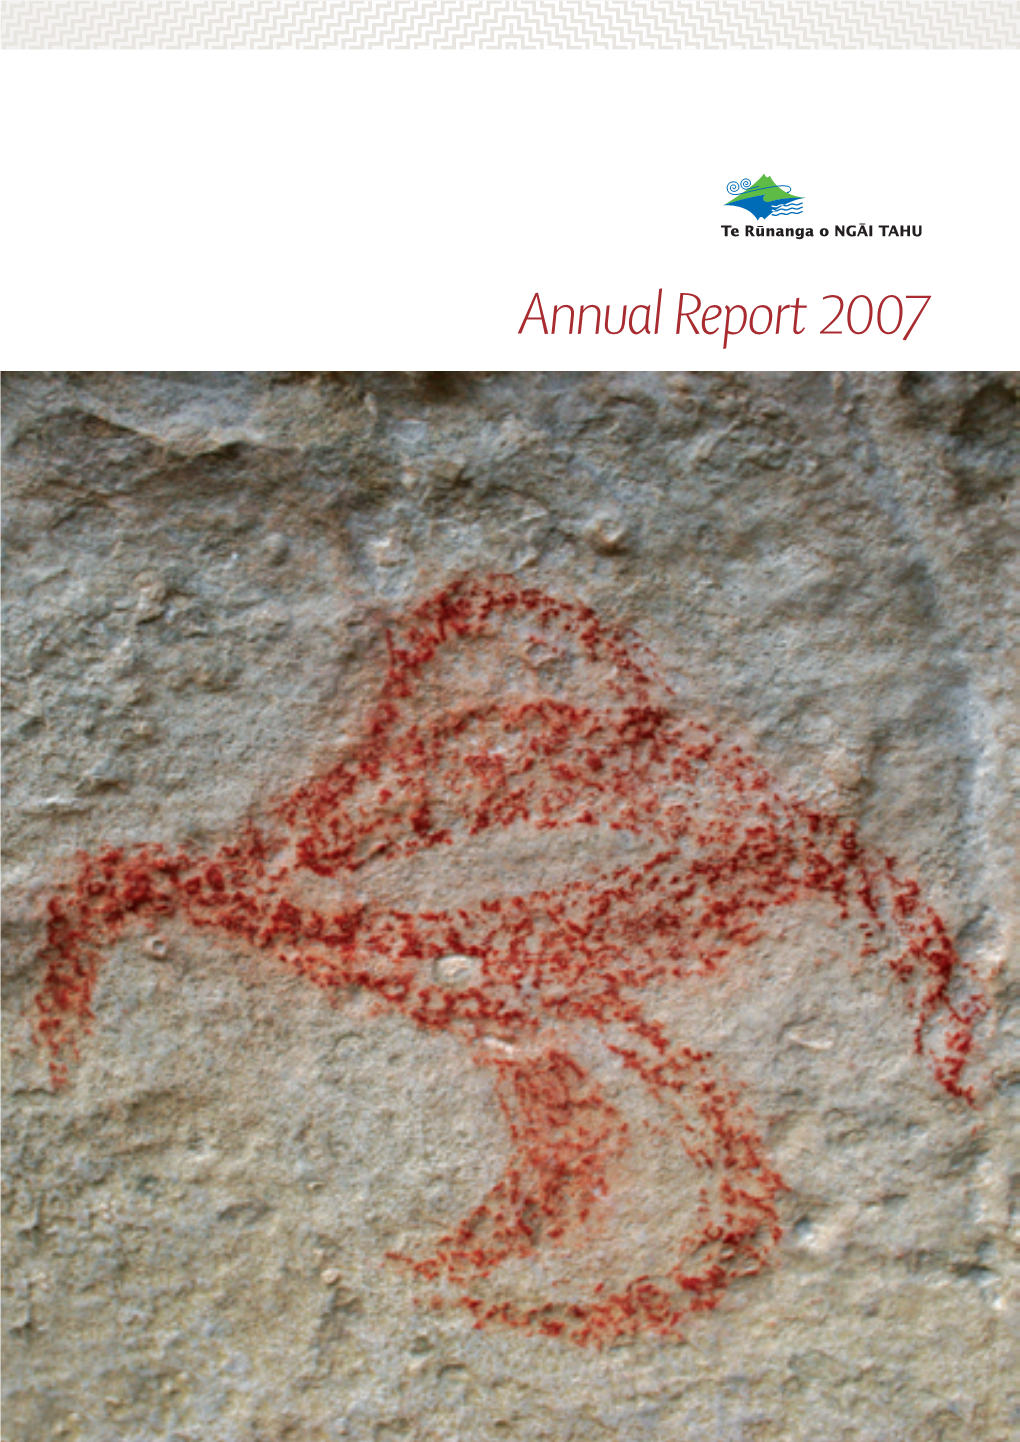 Annual Report 2007 the NGÄI TAHU MÄORI ROCK ART TRUST the Rock Art Images for This Annual Report Were Provided by Our Tribal Rock Art Trust